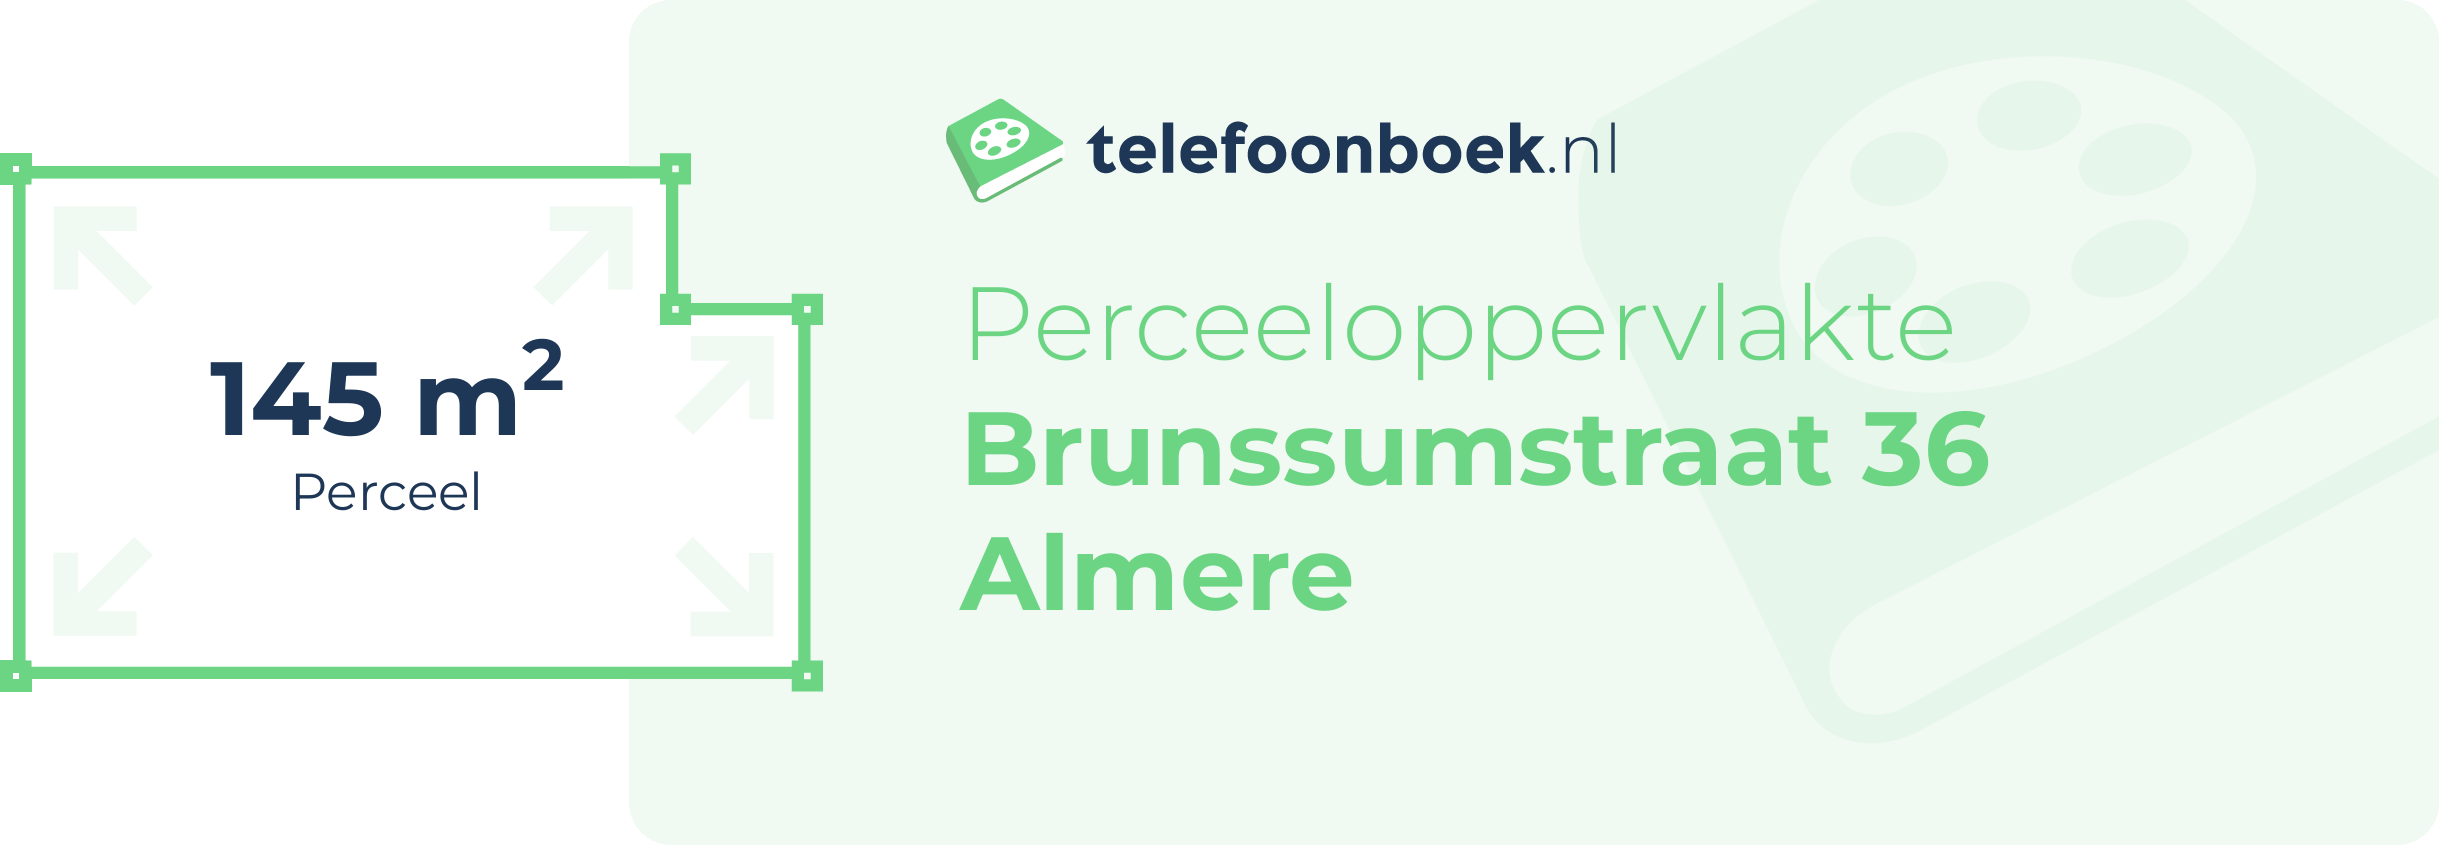 Perceeloppervlakte Brunssumstraat 36 Almere